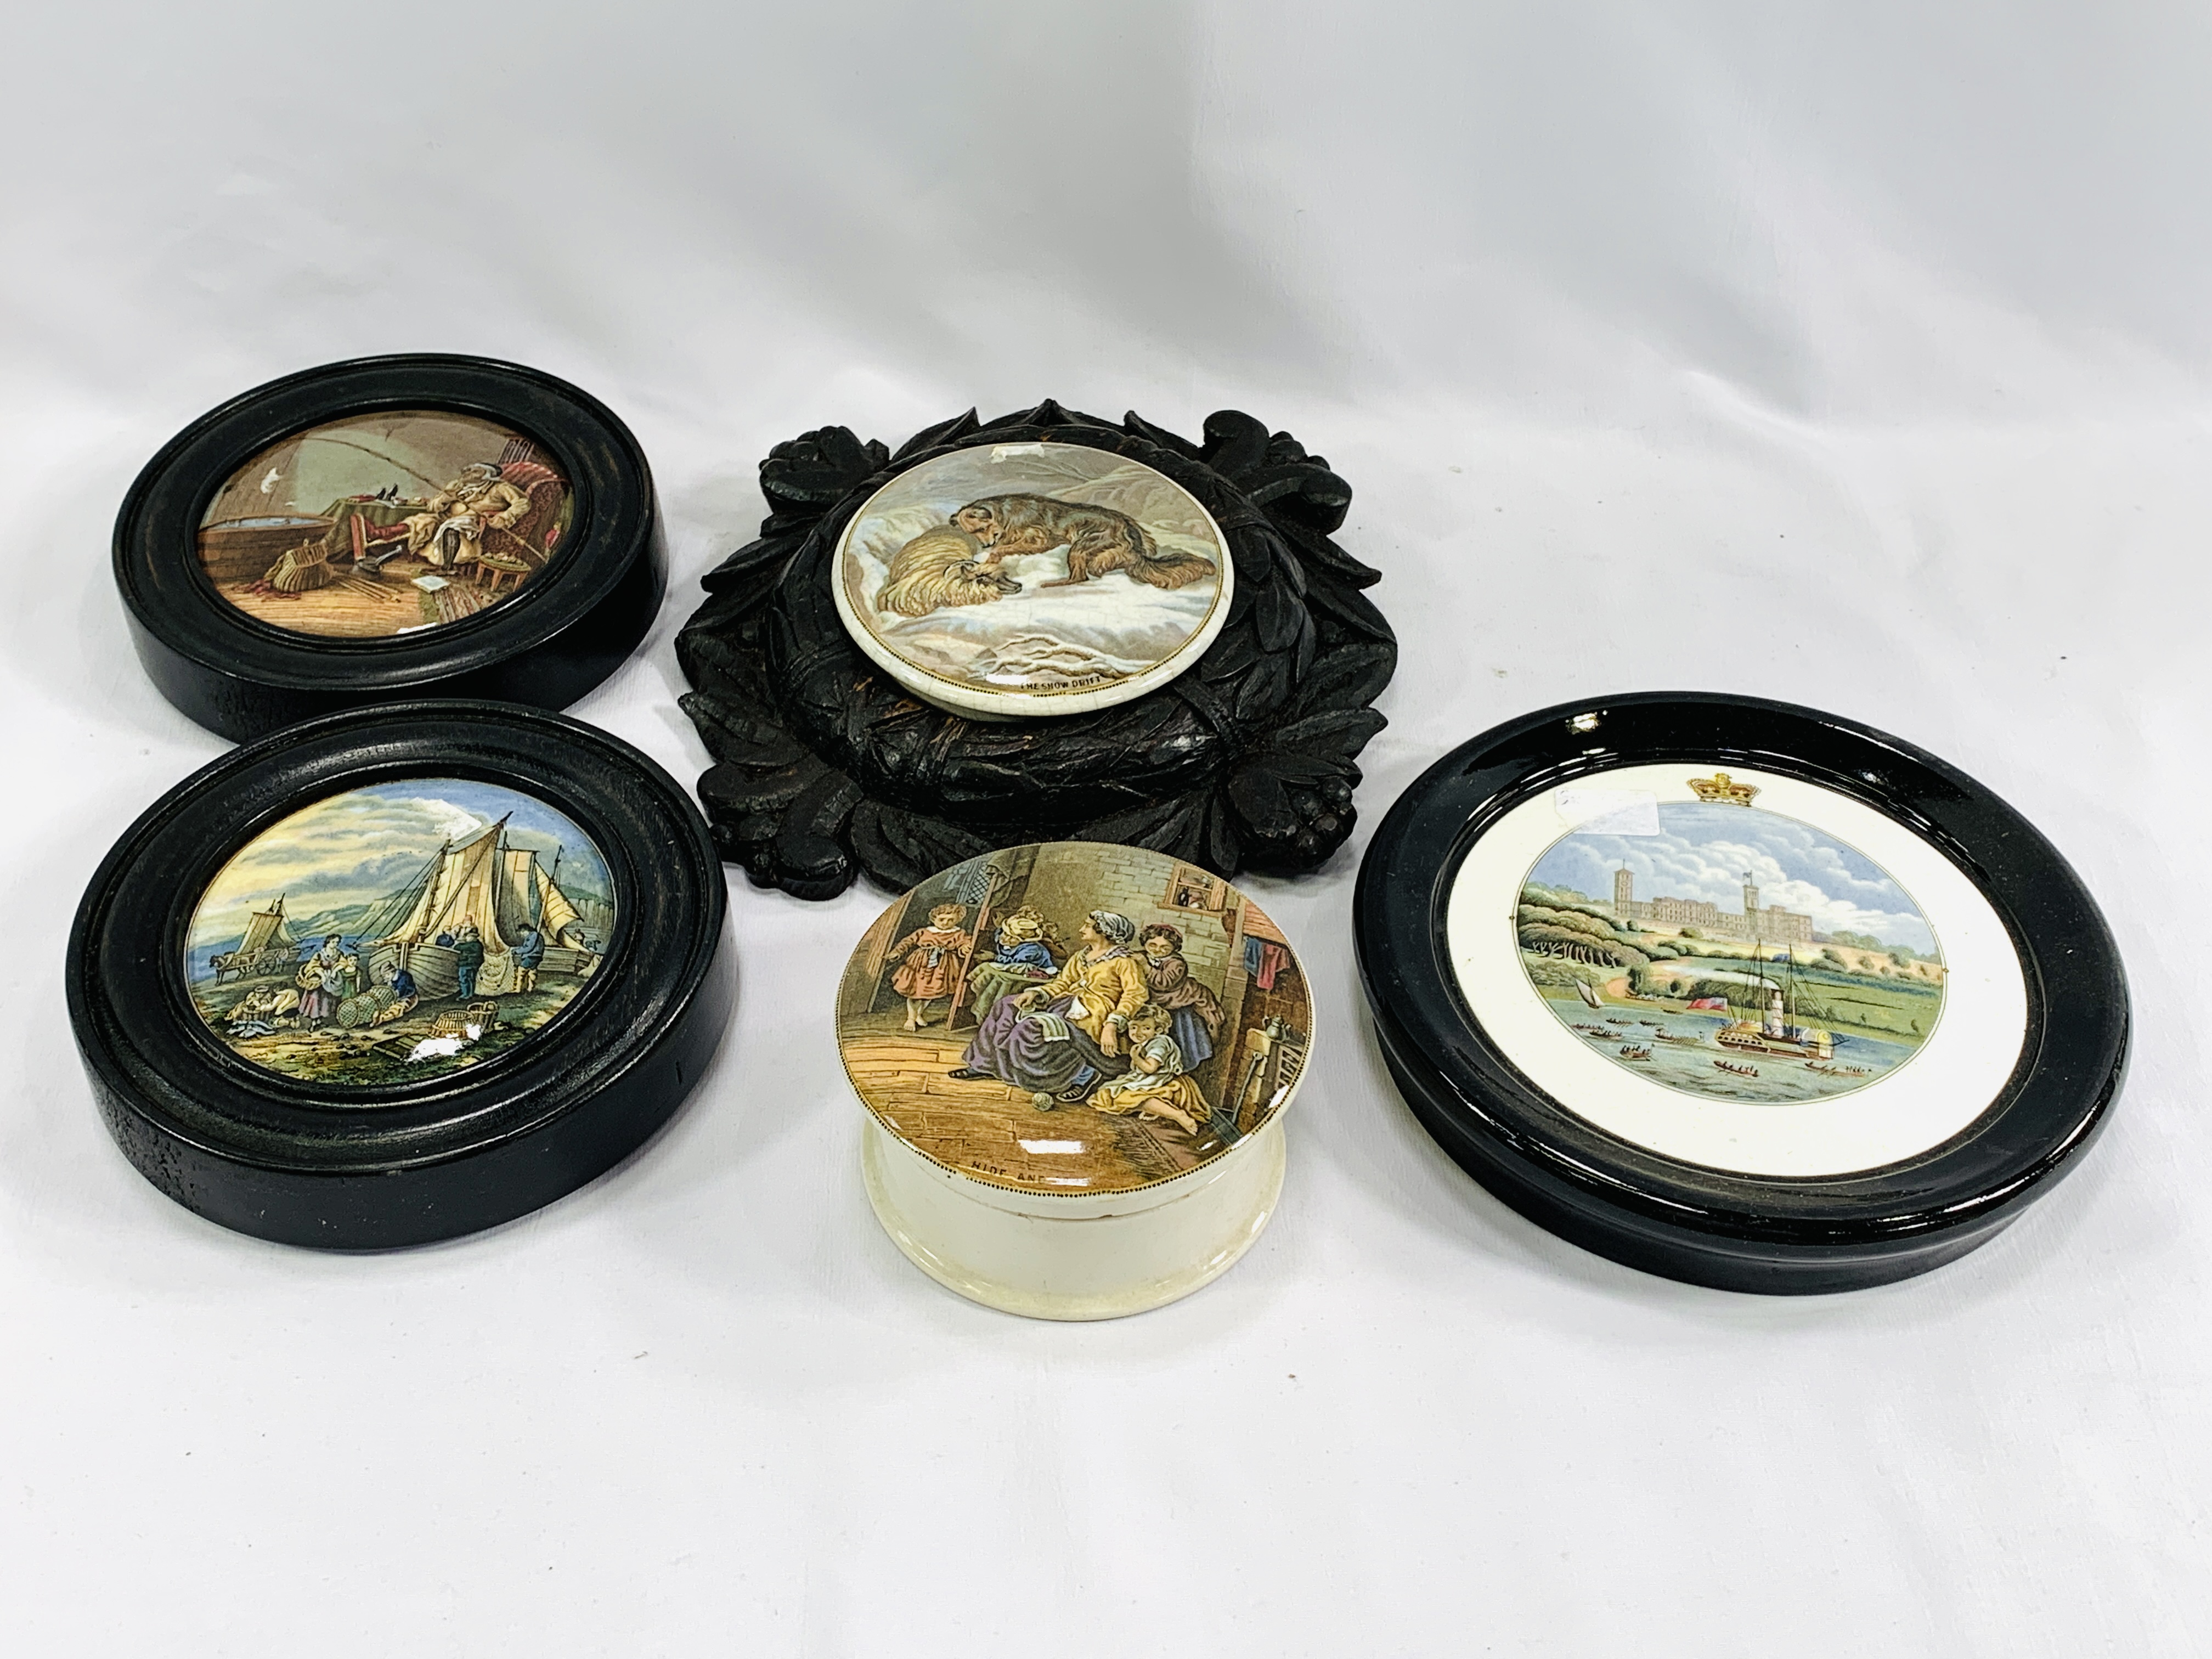 A collection of ceramic pot lids